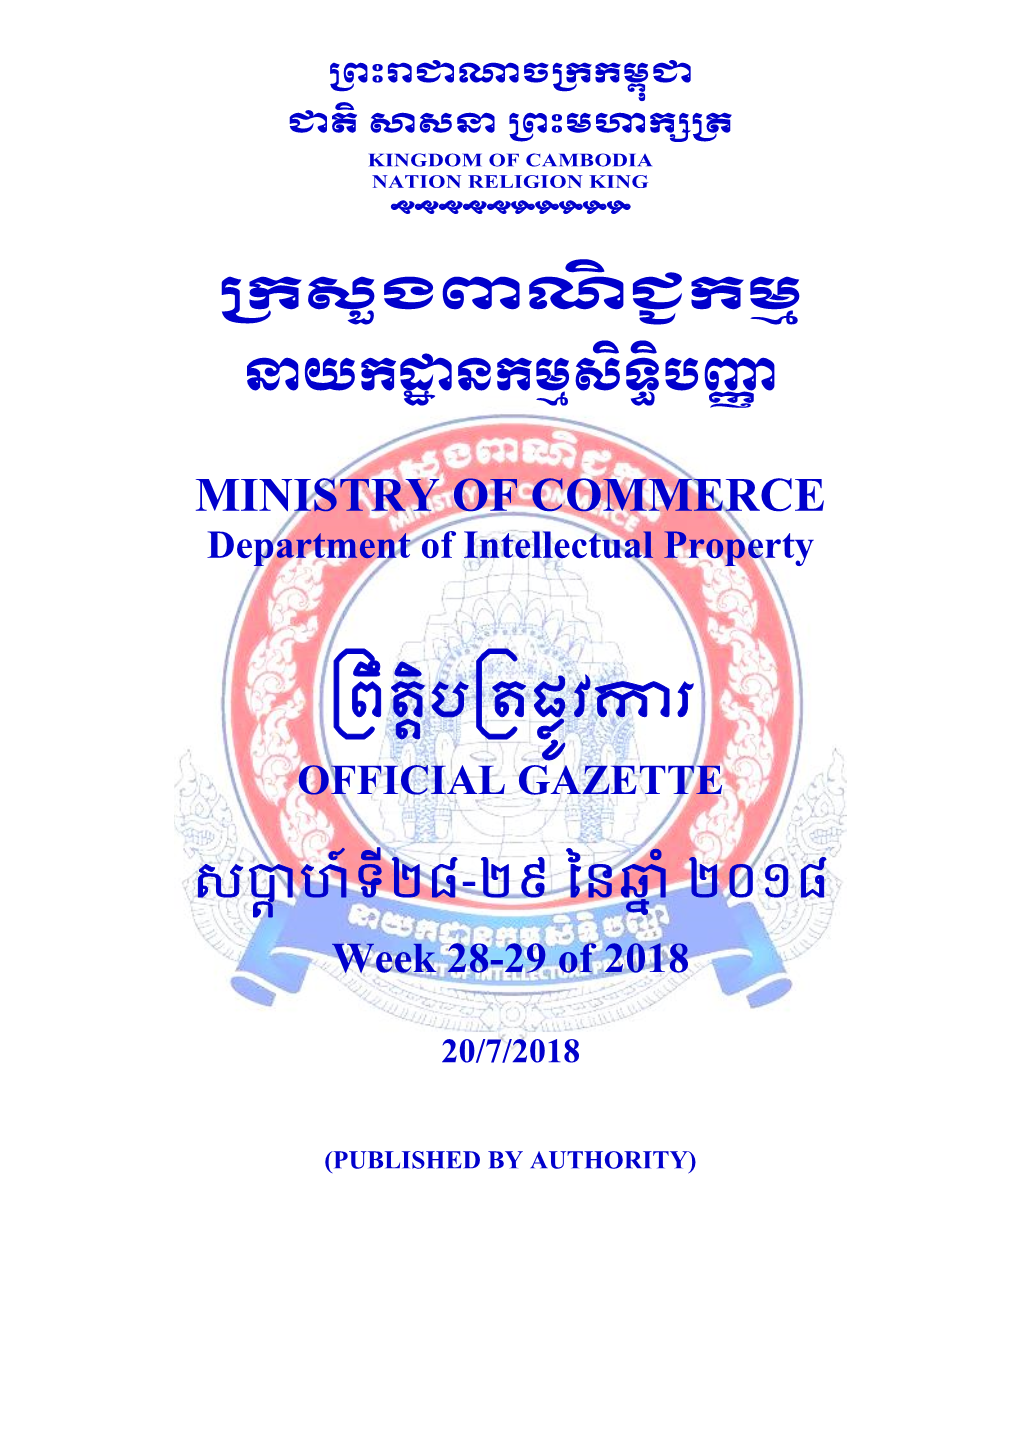 Khan Tuol Kork, Phnom Penh Cambodia 8- 68231 9- 09/07/2018 10